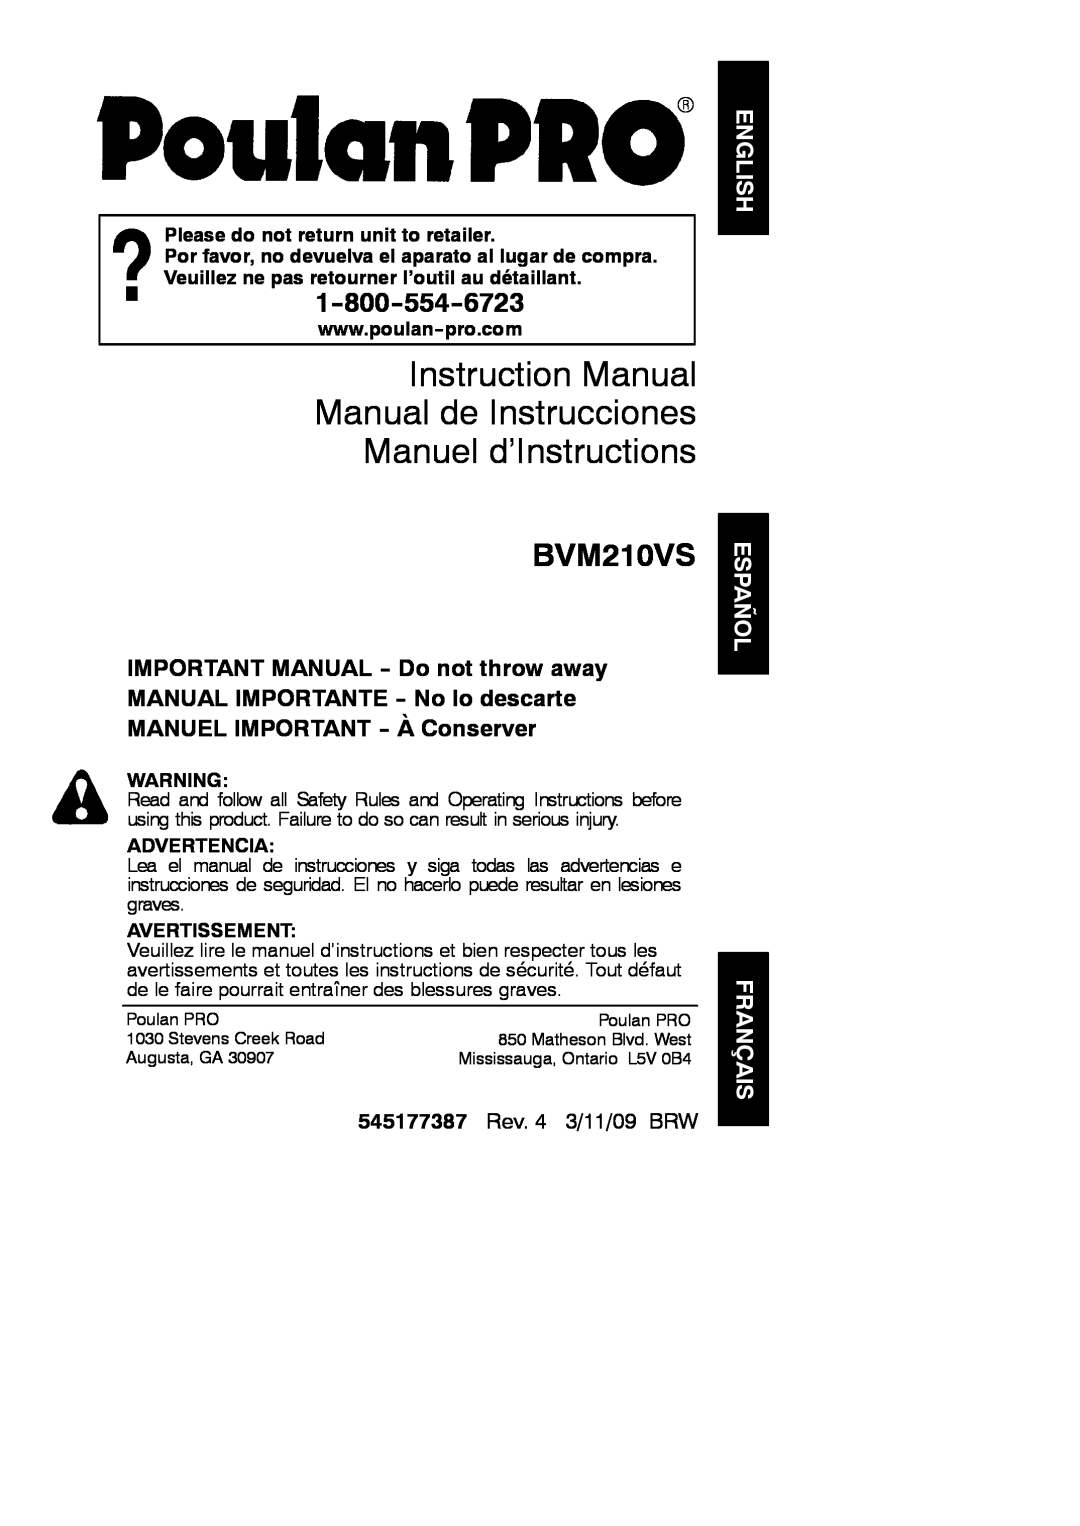 Poulan BVM210VS instruction manual English Español Français, 545177387 Rev. 4 3/11/09 BRW, Advertencia, Avertissement 